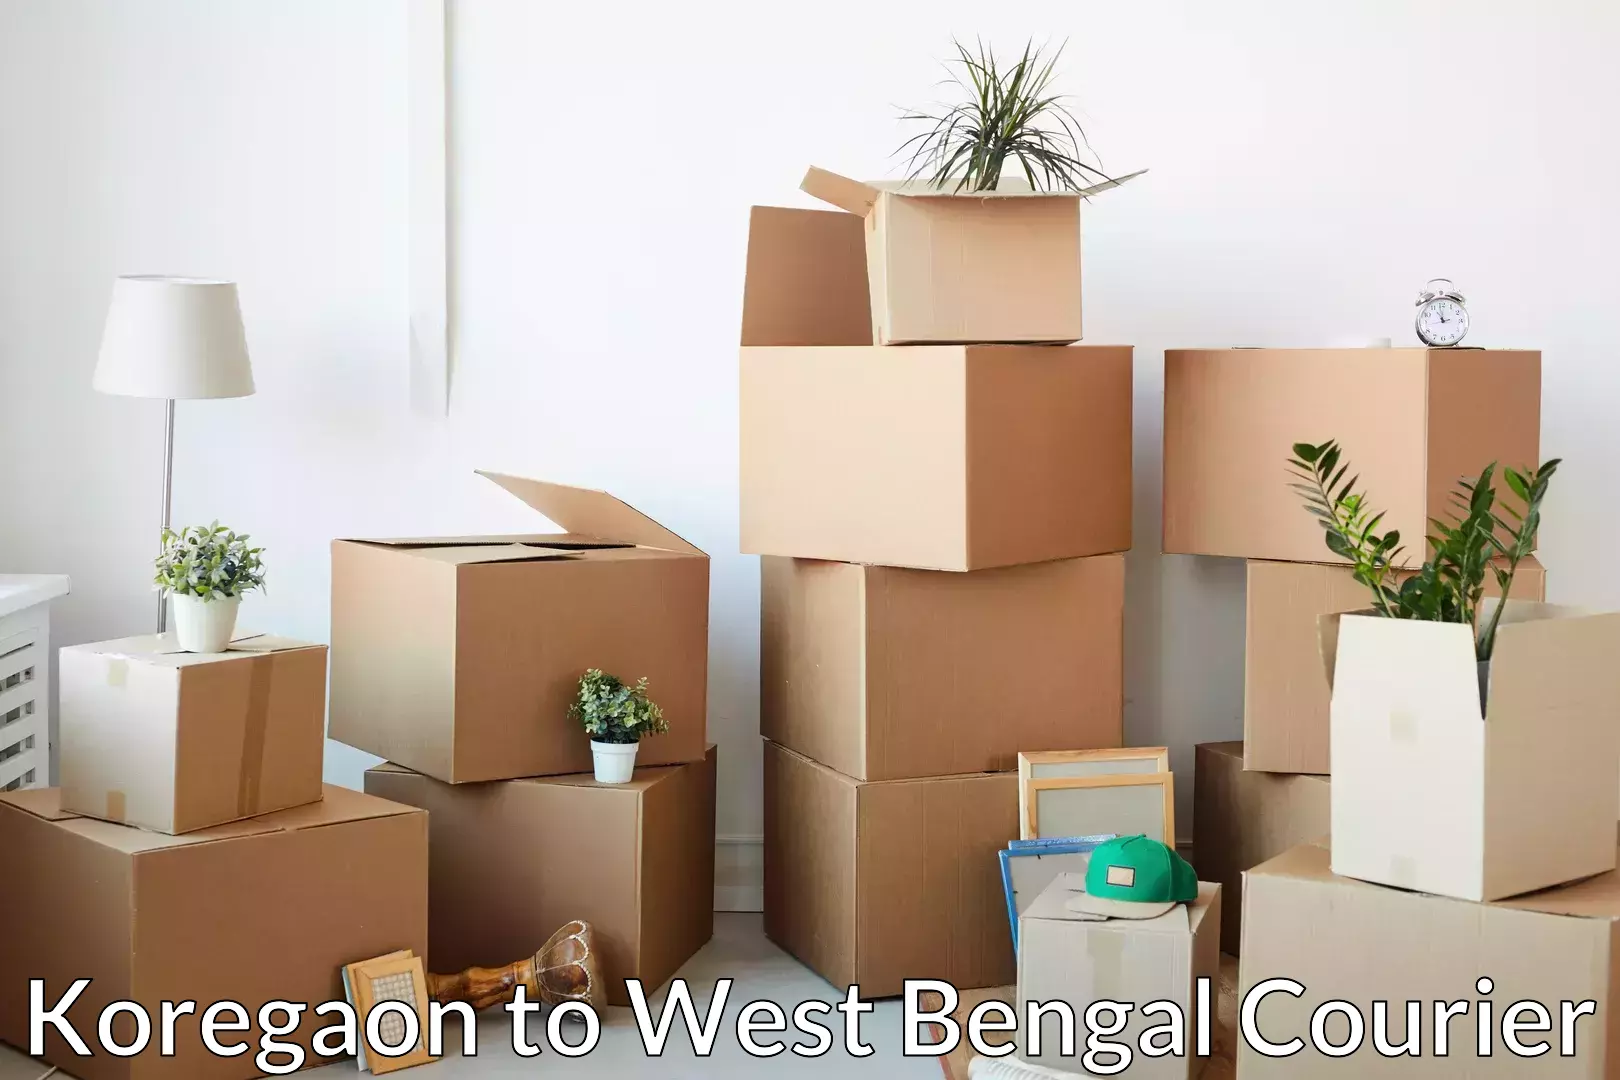 Professional movers and packers Koregaon to Kolkata Port